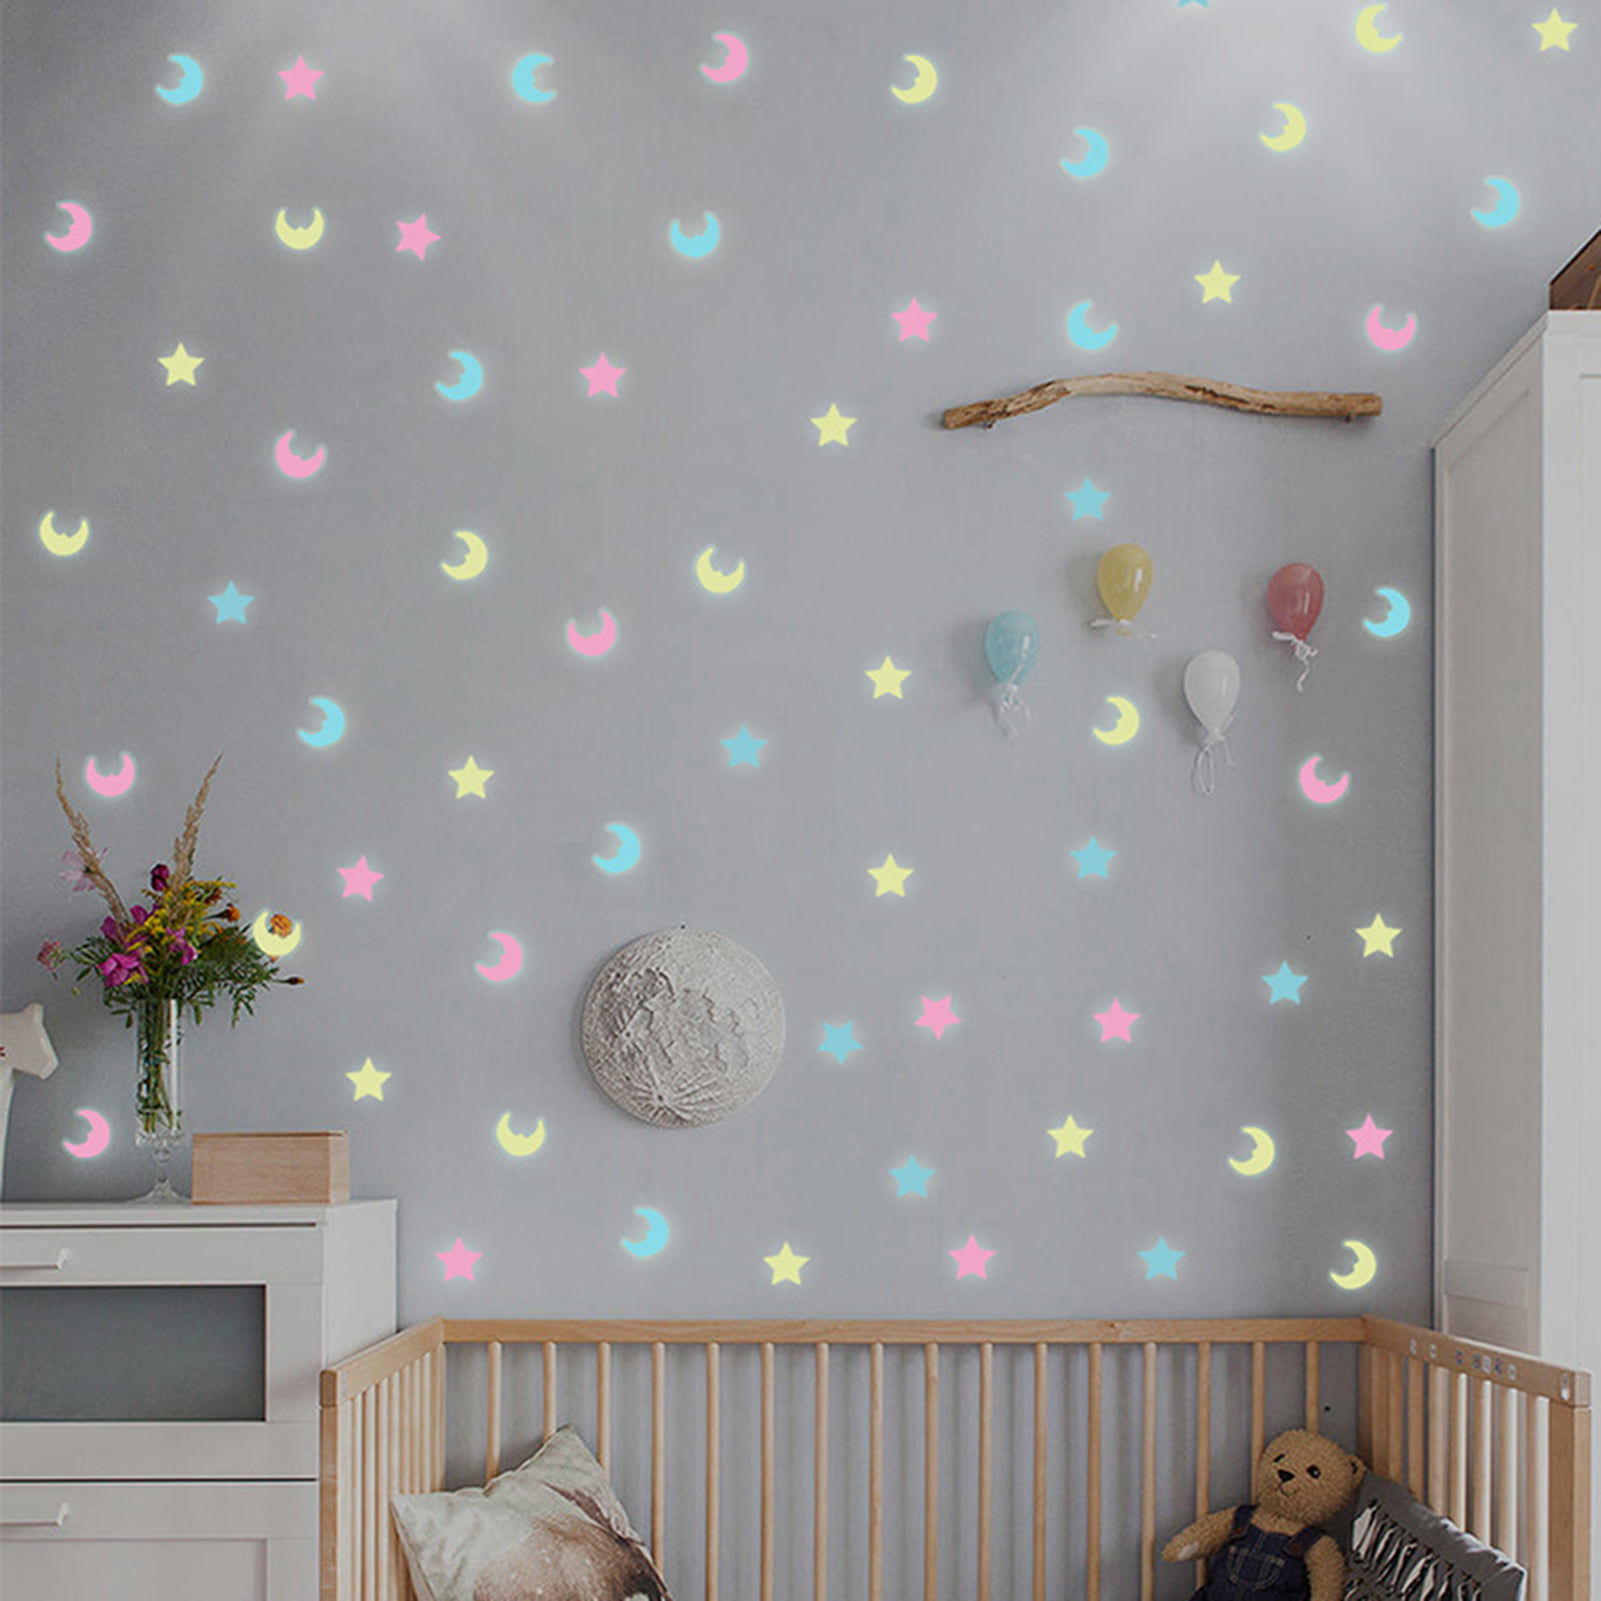 100x Glow In The Dark Stars Wall Stickers Bedroom Home Kids Room Decoration DIY